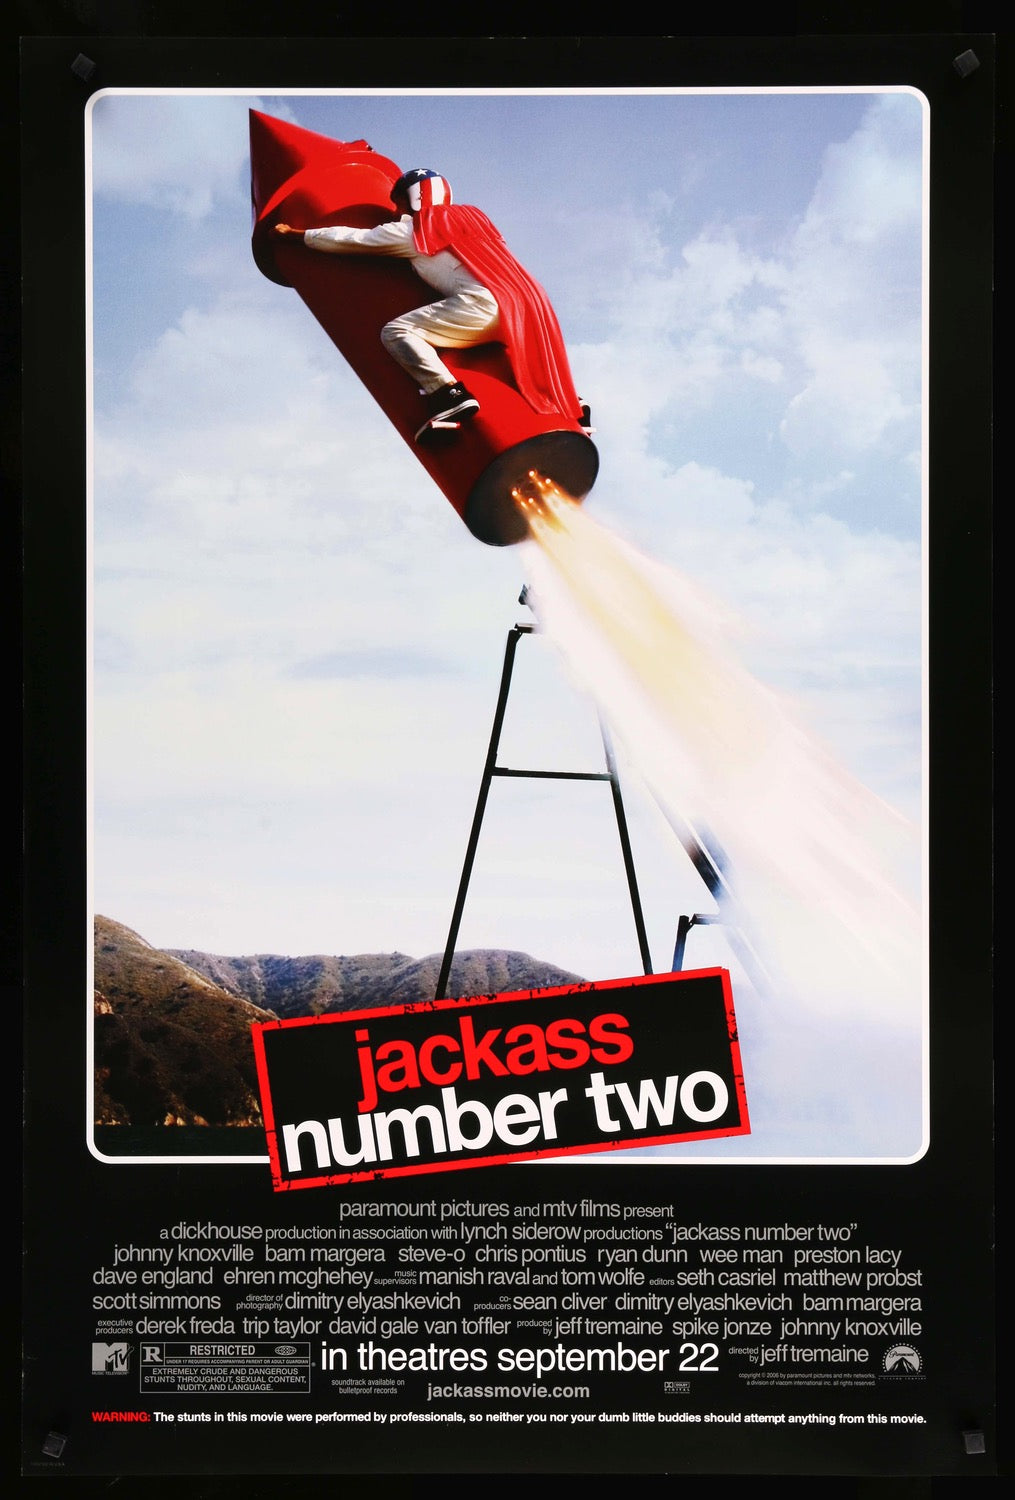 Jackass Number Two (2006) original movie poster for sale at Original Film Art